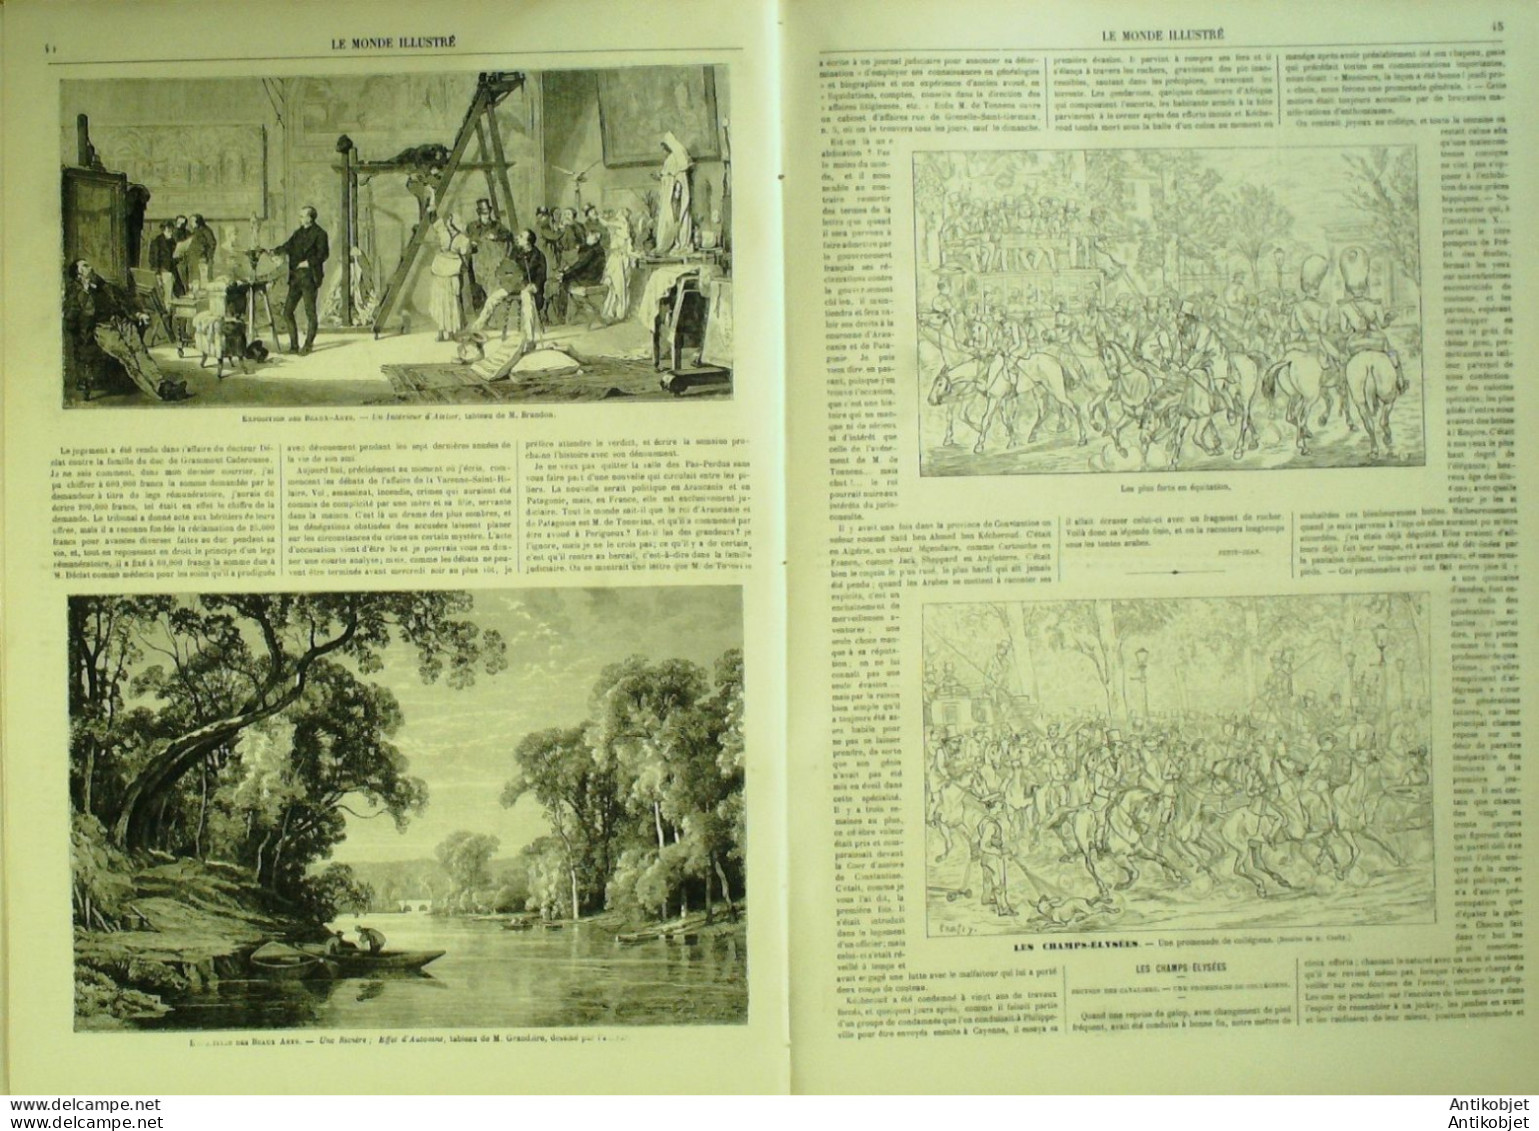 Le Monde illustré 1868 n°588 Le Havre (76) Strasbourg (67) Comores Djombe Fatouma reine Moheli Aime (73)